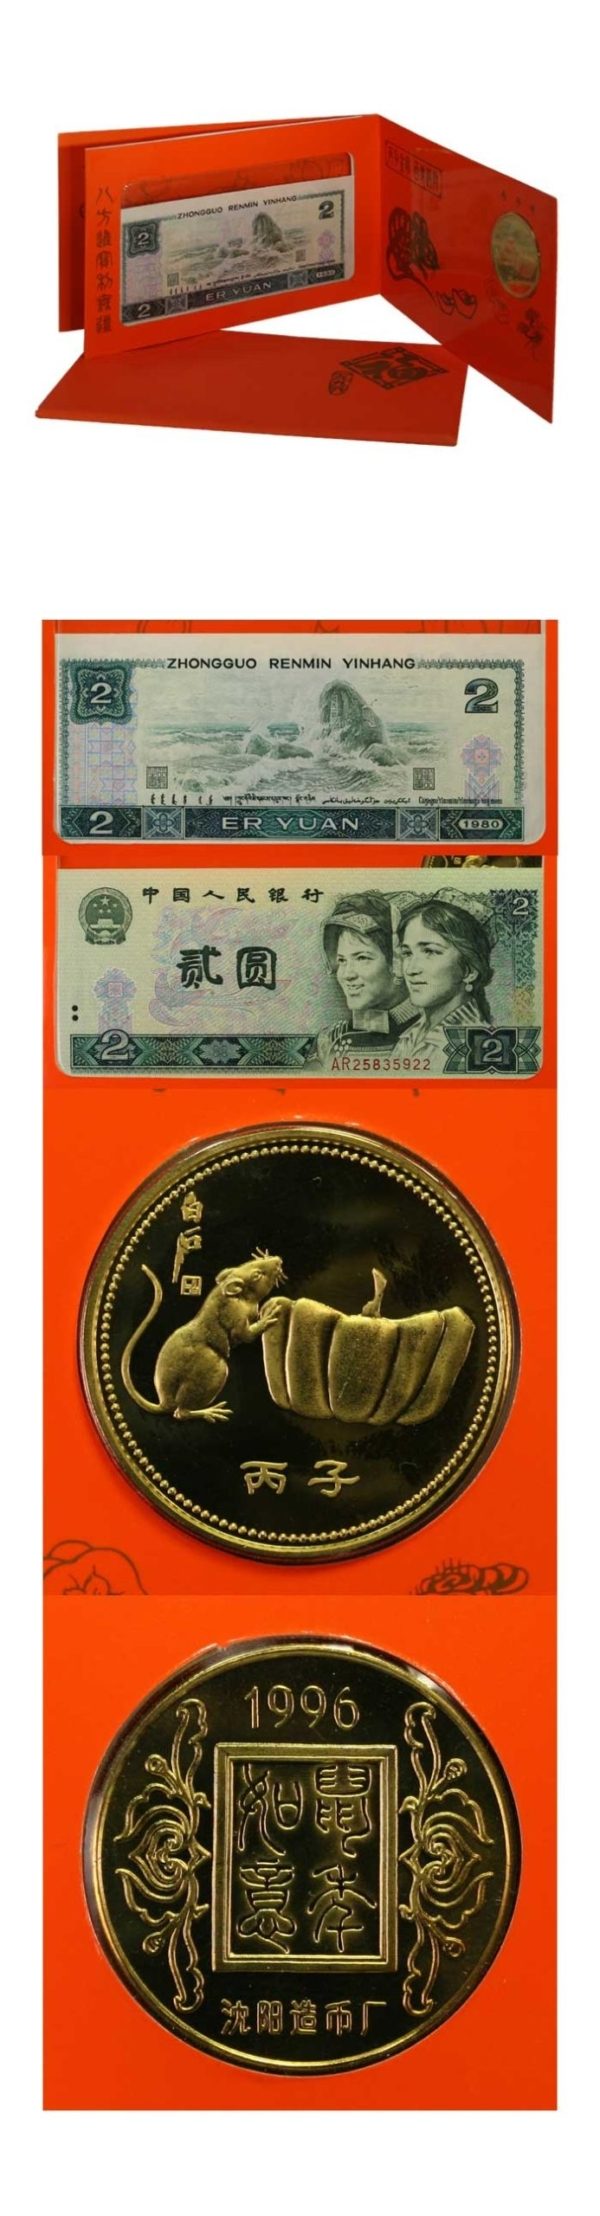 China - Zodiac - Coin & Currency Set - Year of the Rat - 1996 - 25 Sen - Presentation Folder